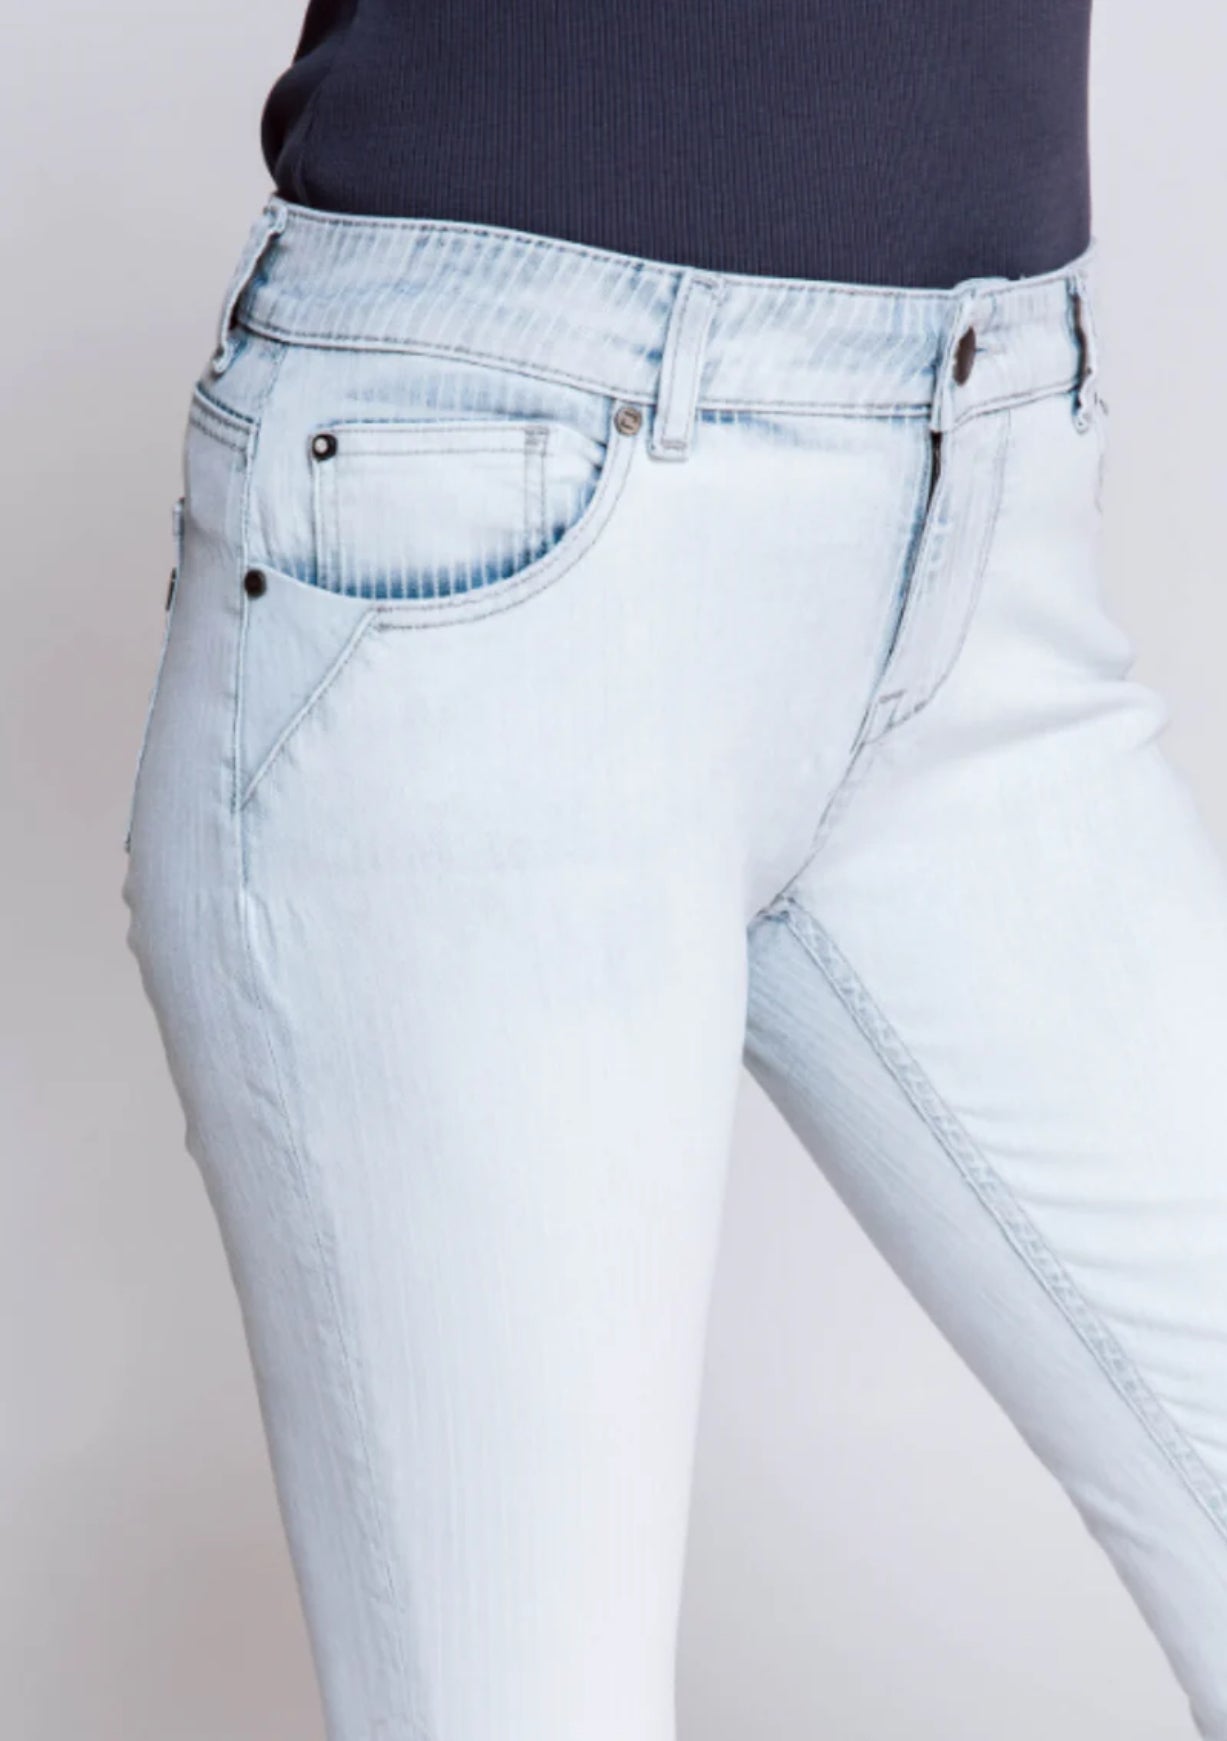 NOVA Skinny Jeans D124101-W0029 - Zhrill